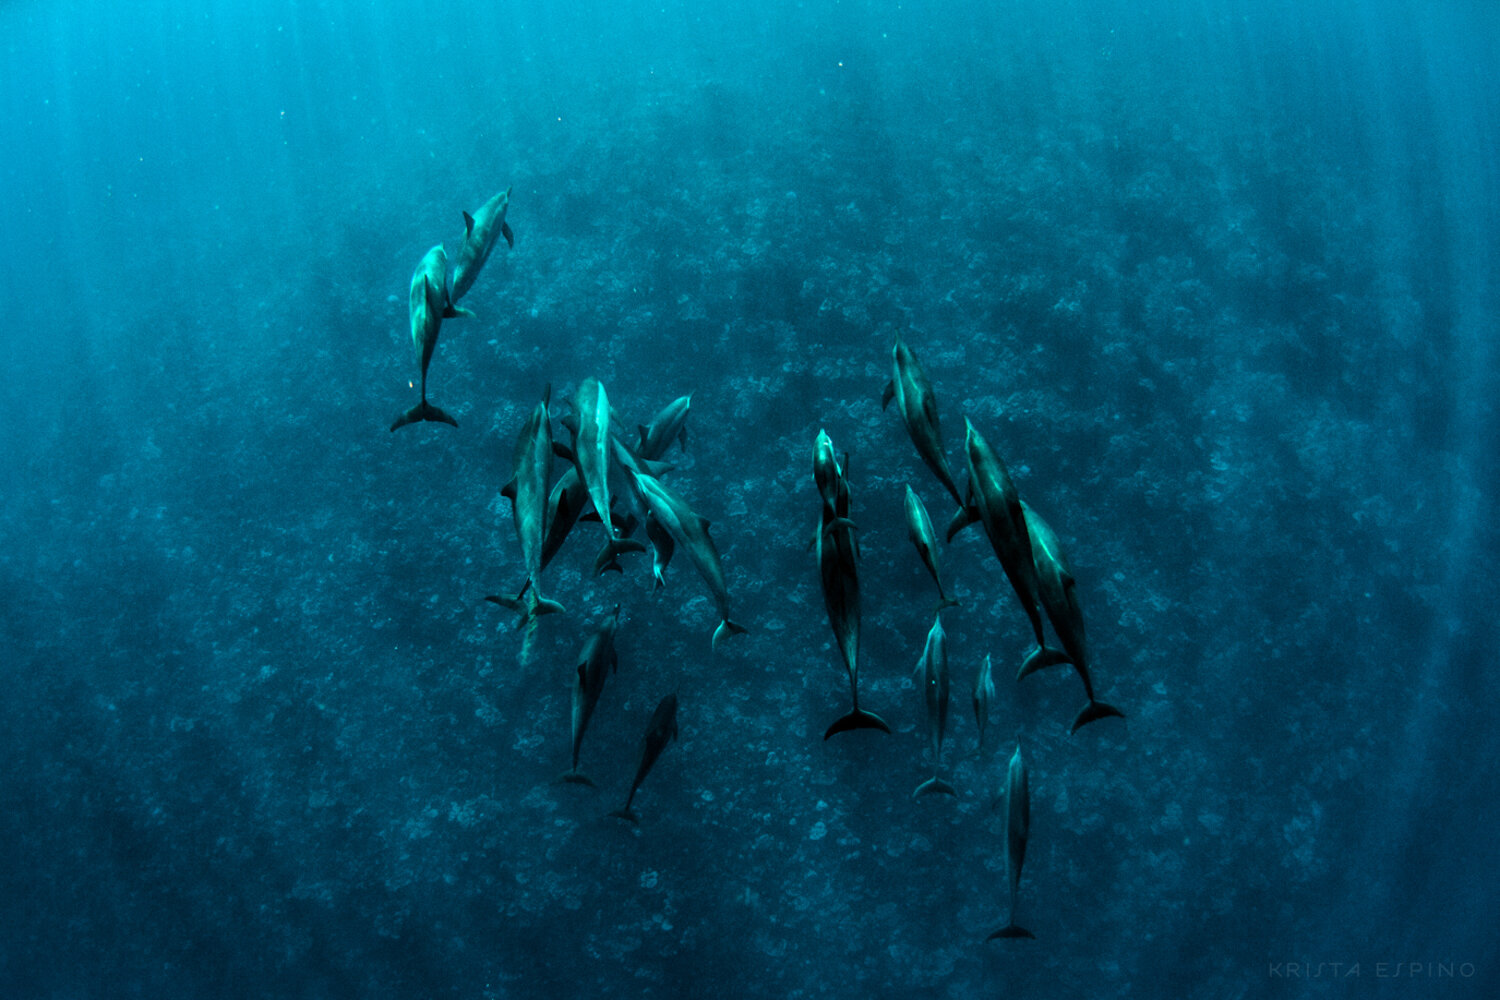 dolphin eco tour wild wildlife sealife lifestyle nature photography photographer krista espino travel underwater swim ocean big island hawaii kona dolphins_-9.jpg